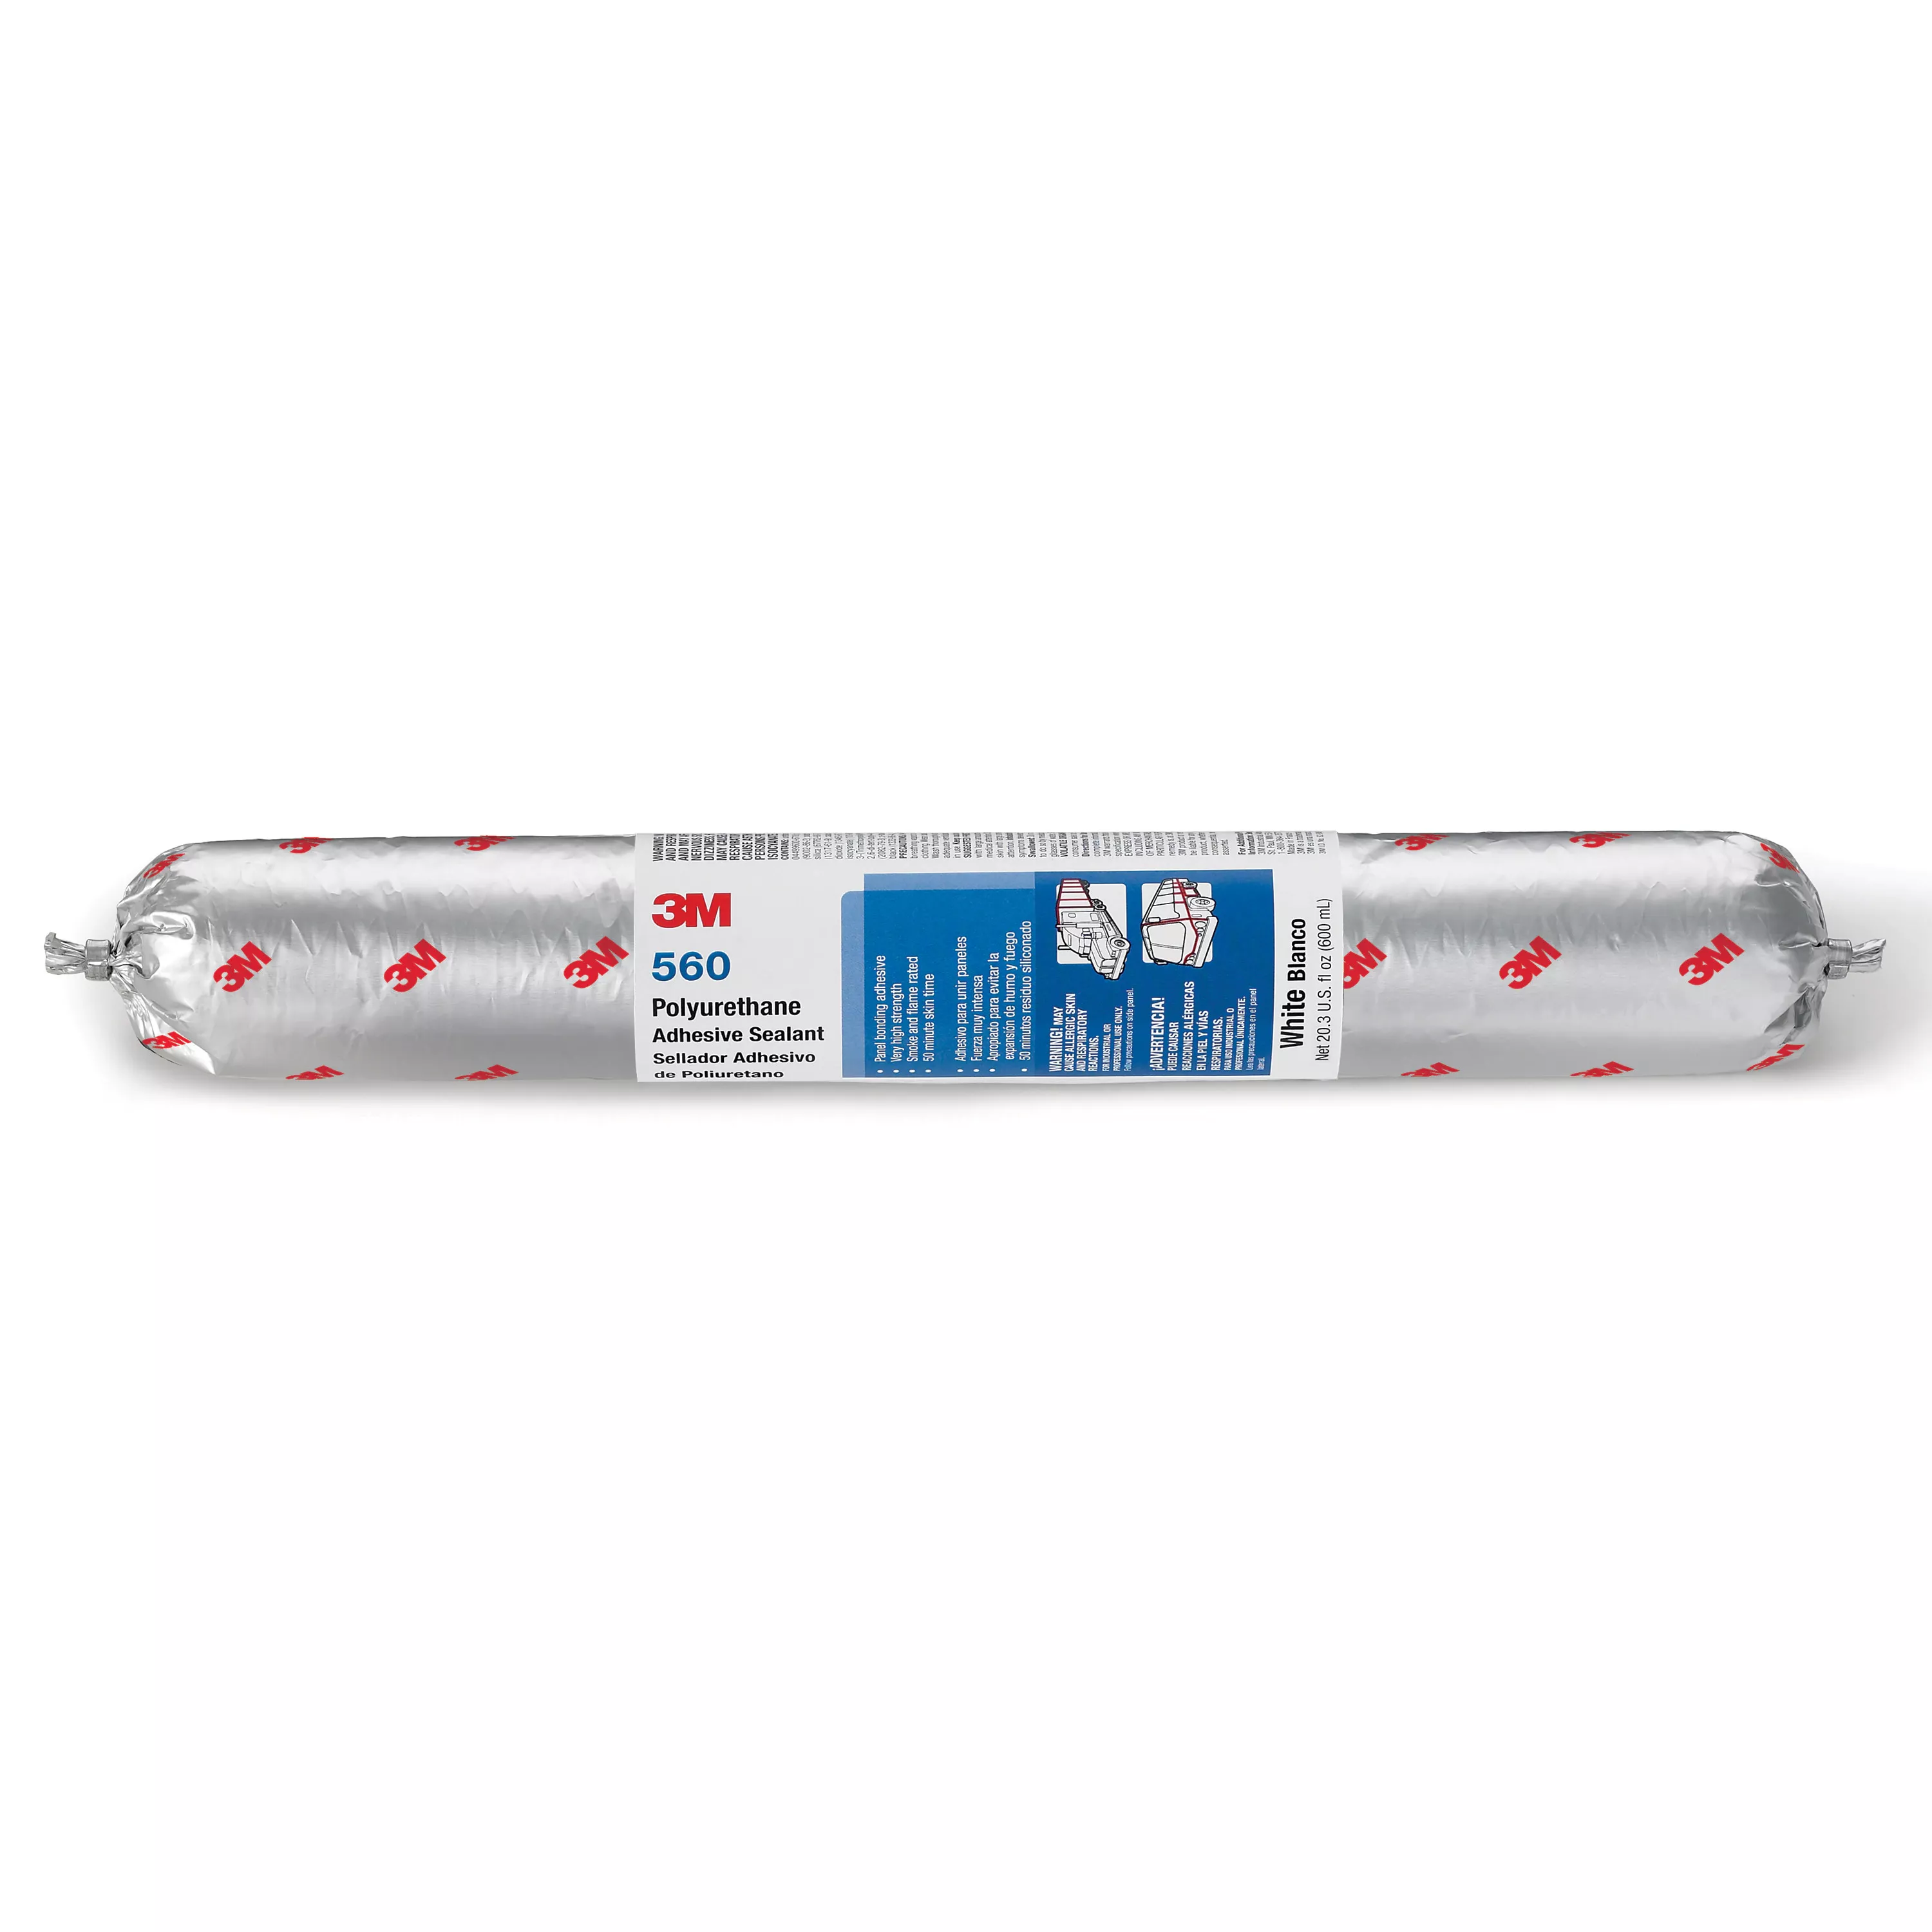 3M™ Polyurethane Adhesive Sealant 560, White, 600 mL Sausage Pack,
12/Case